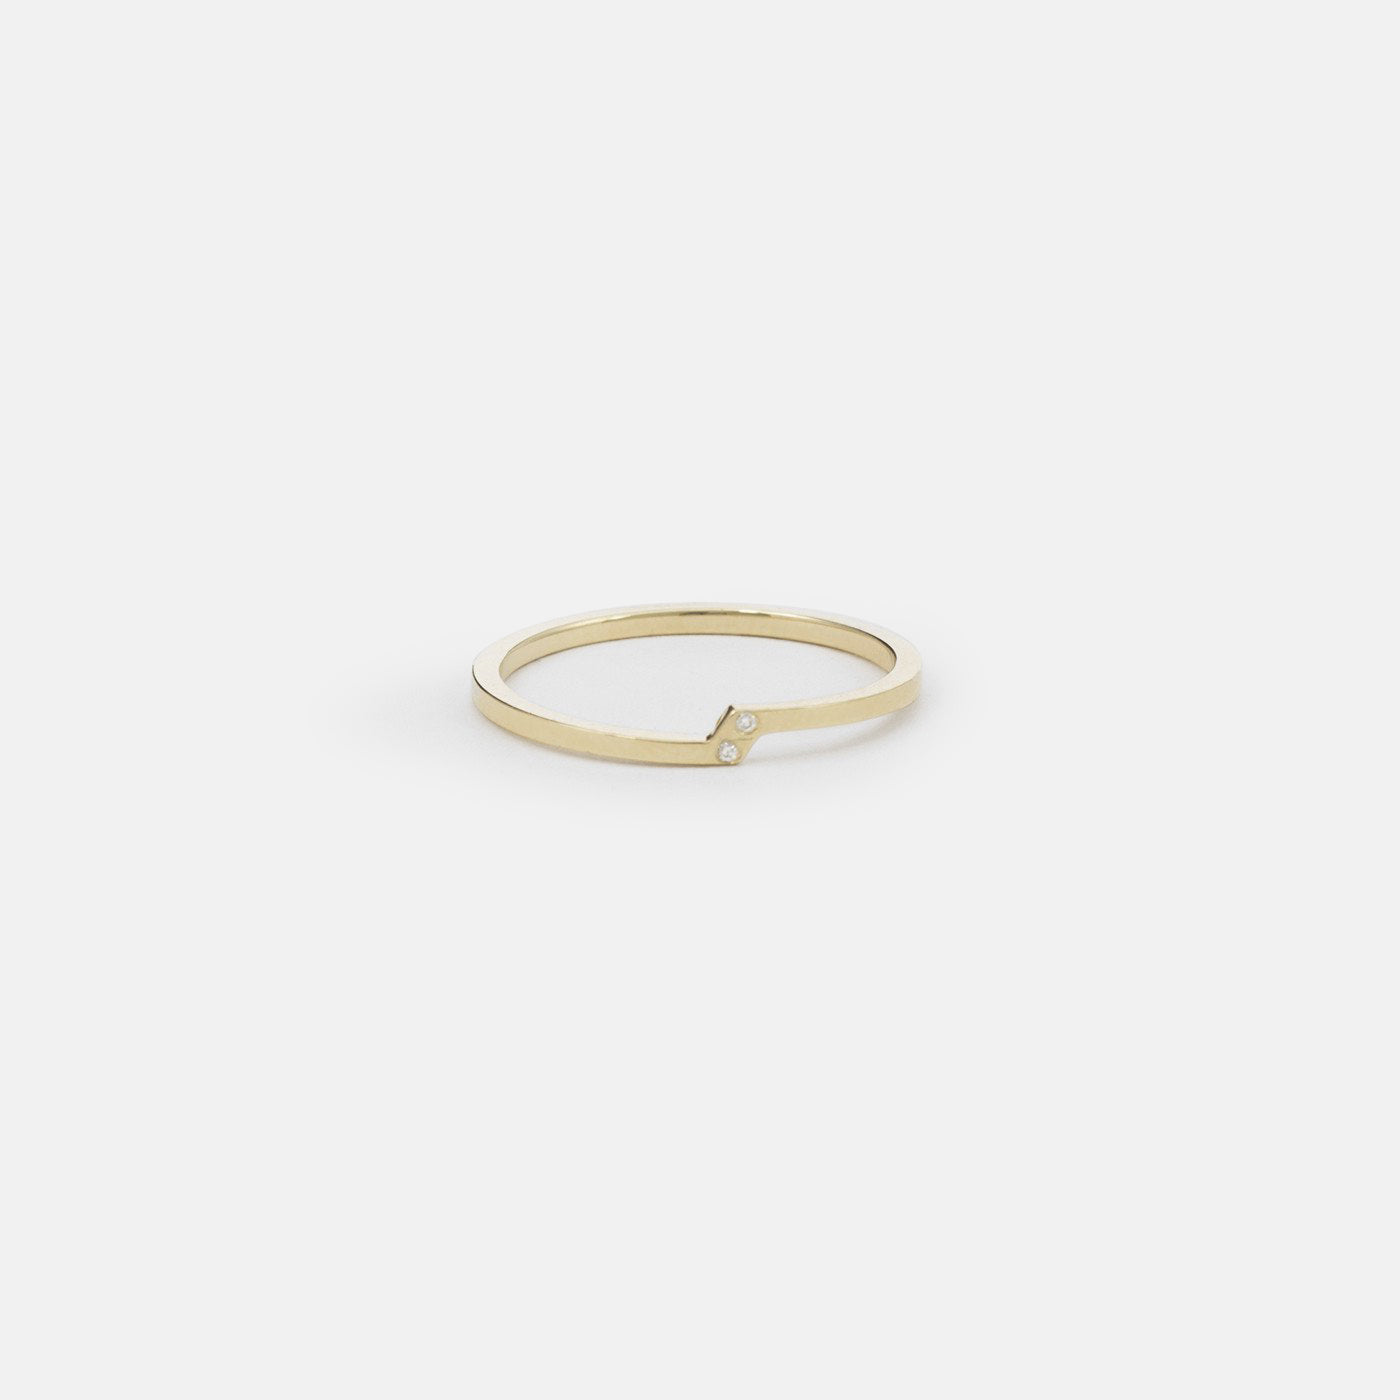 Rili Minimalist Ring in 14k Gold set with White Diamonds By SHW Fine Jewelry NYC